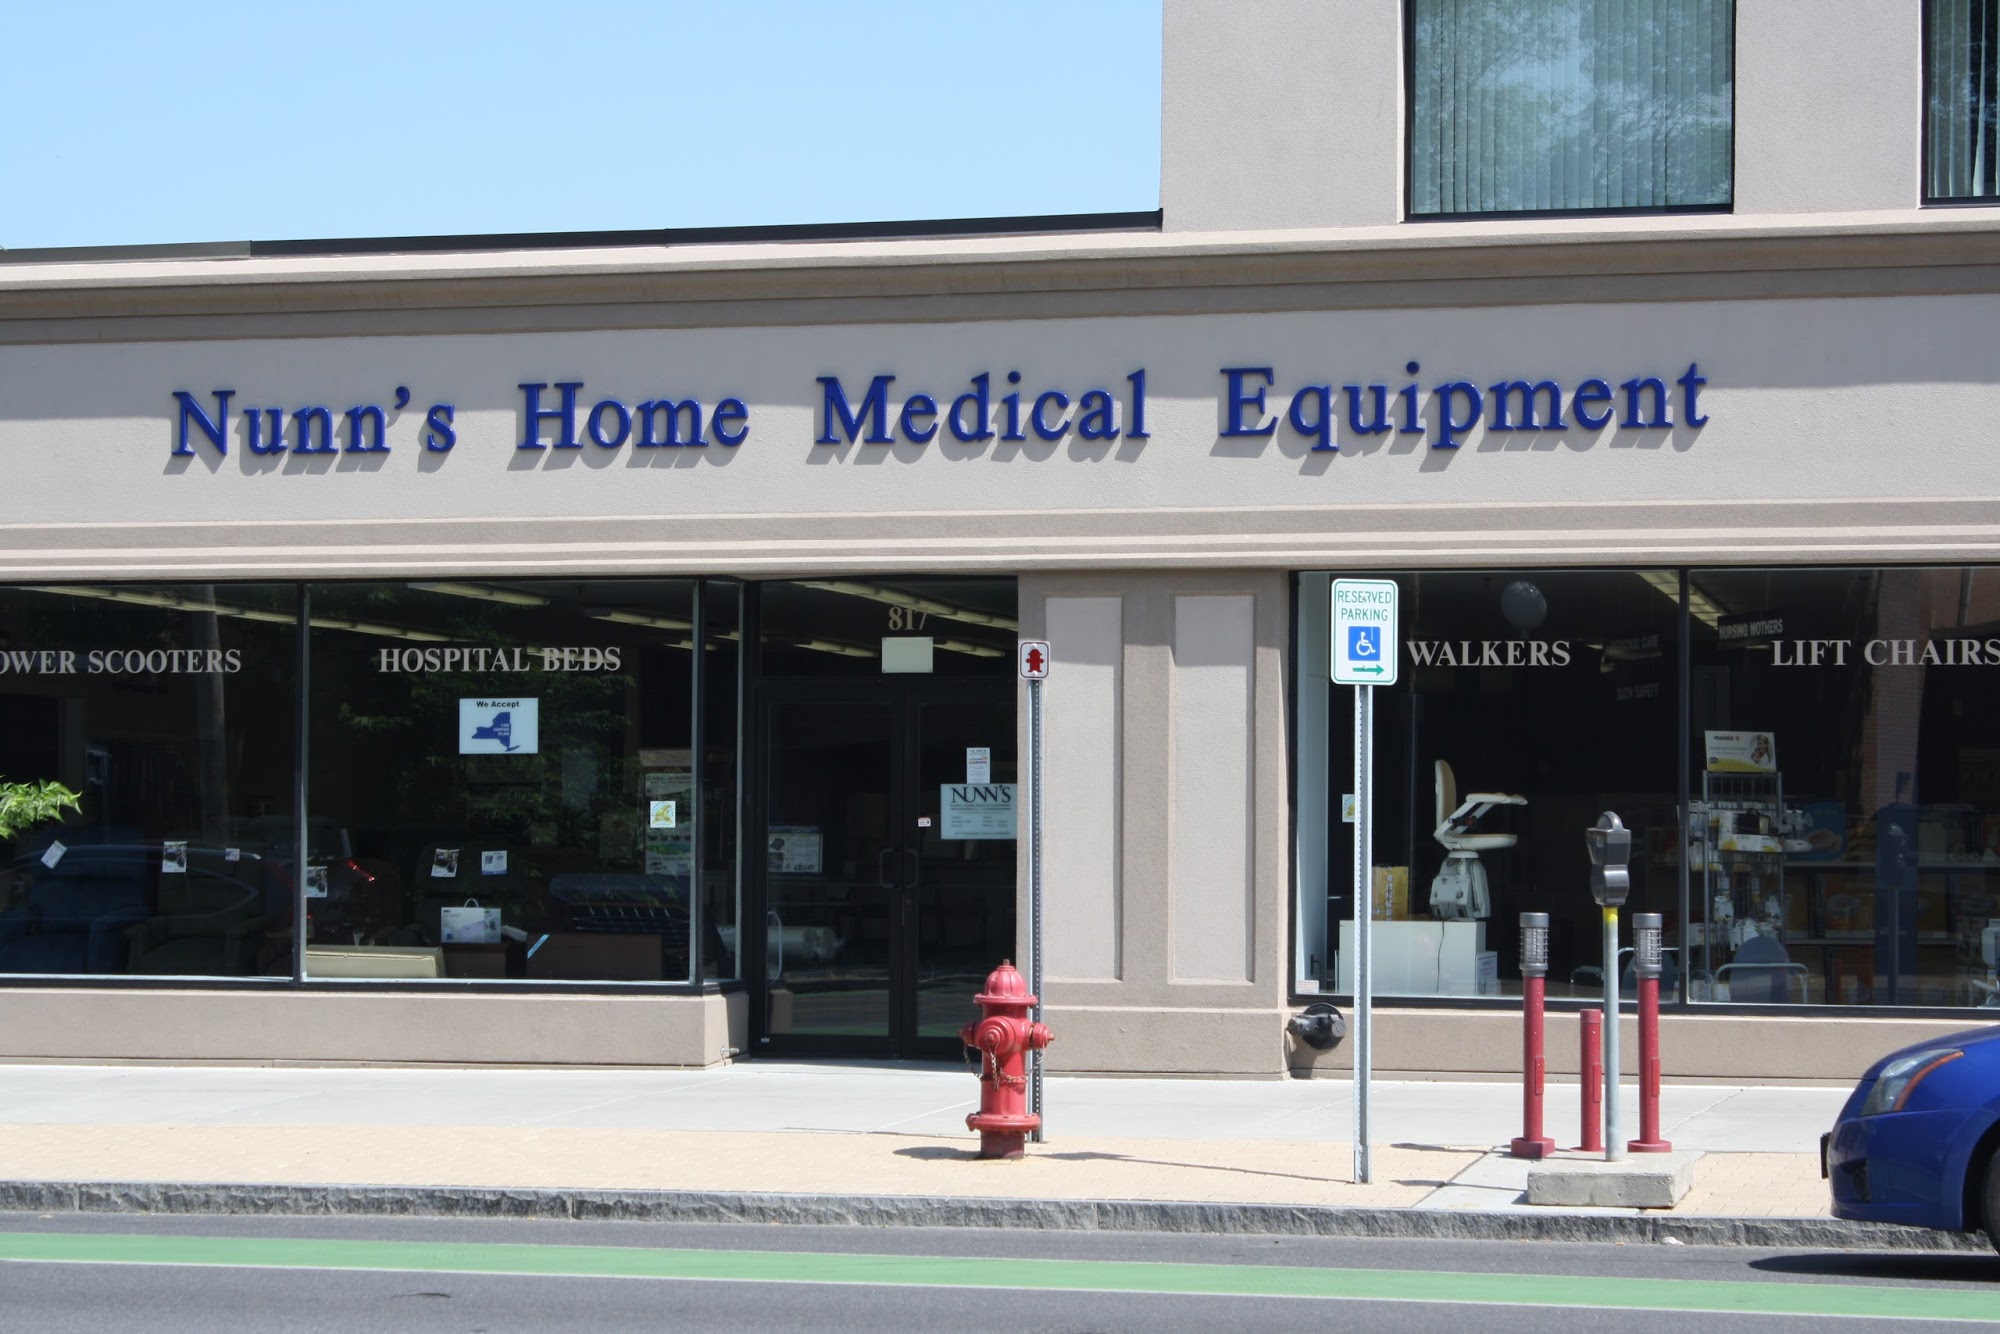 Nunn's Home Medical Equipment